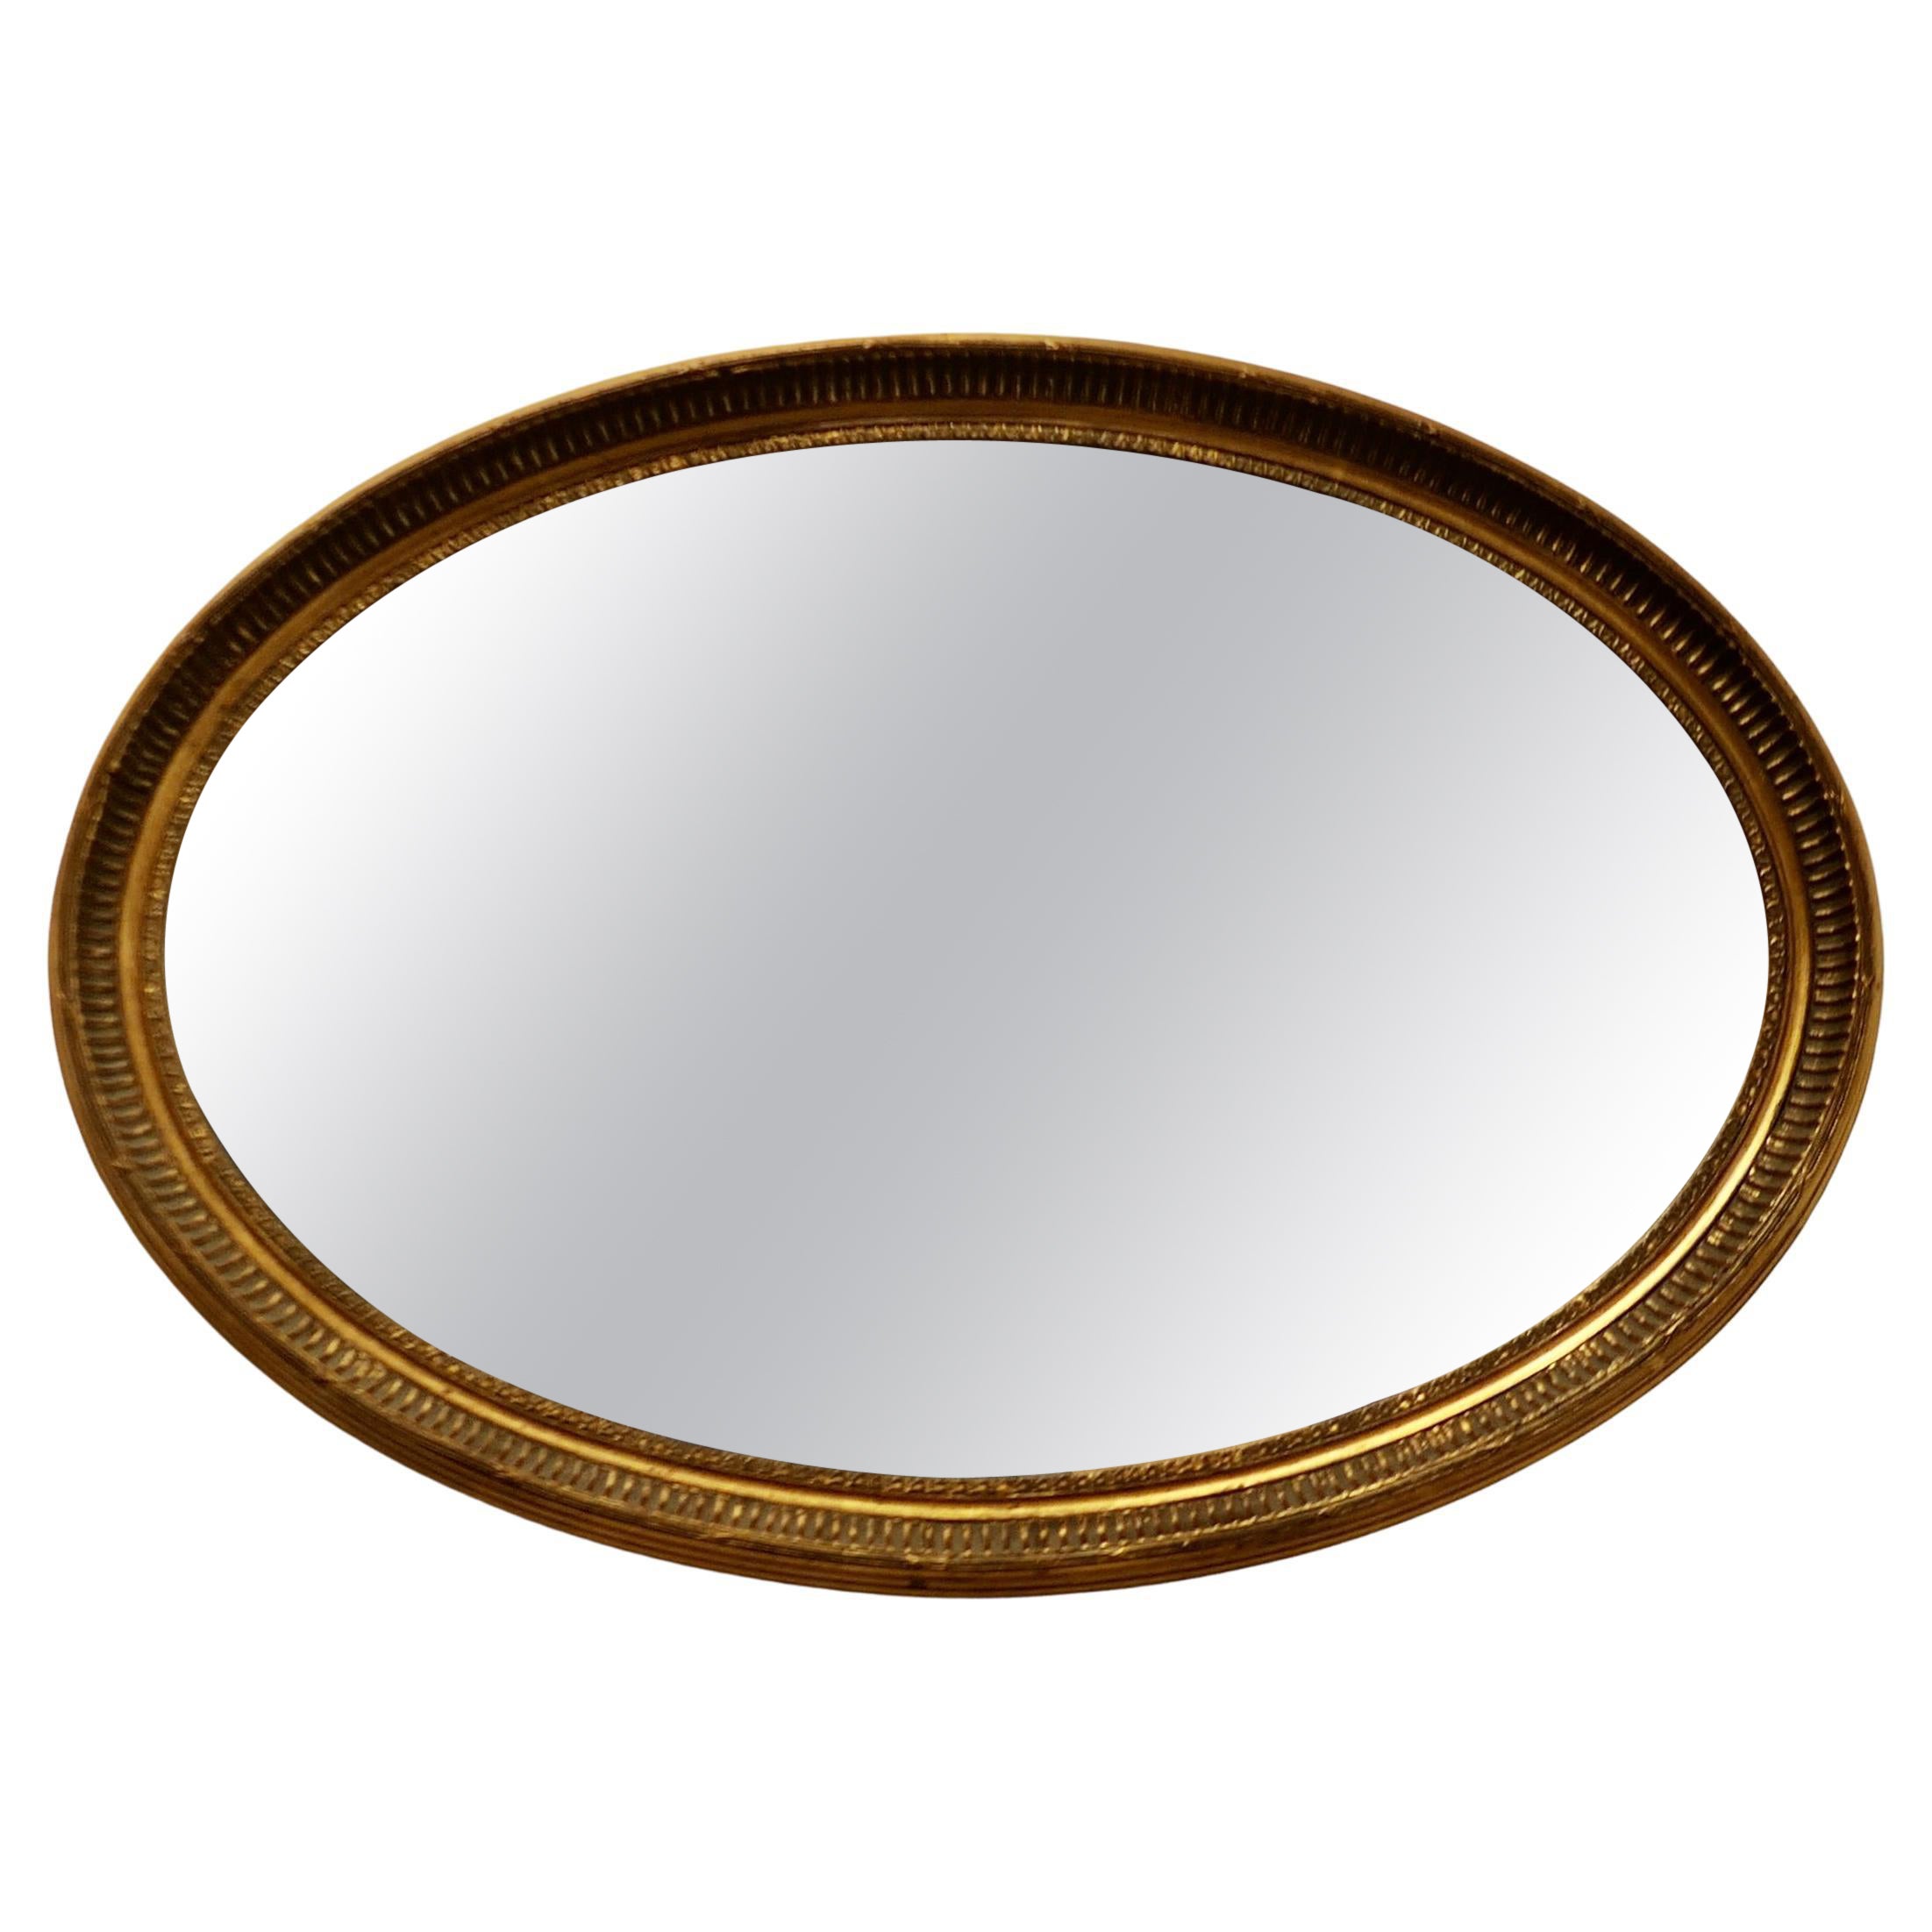 Großer vergoldeter ovaler Spiegel   